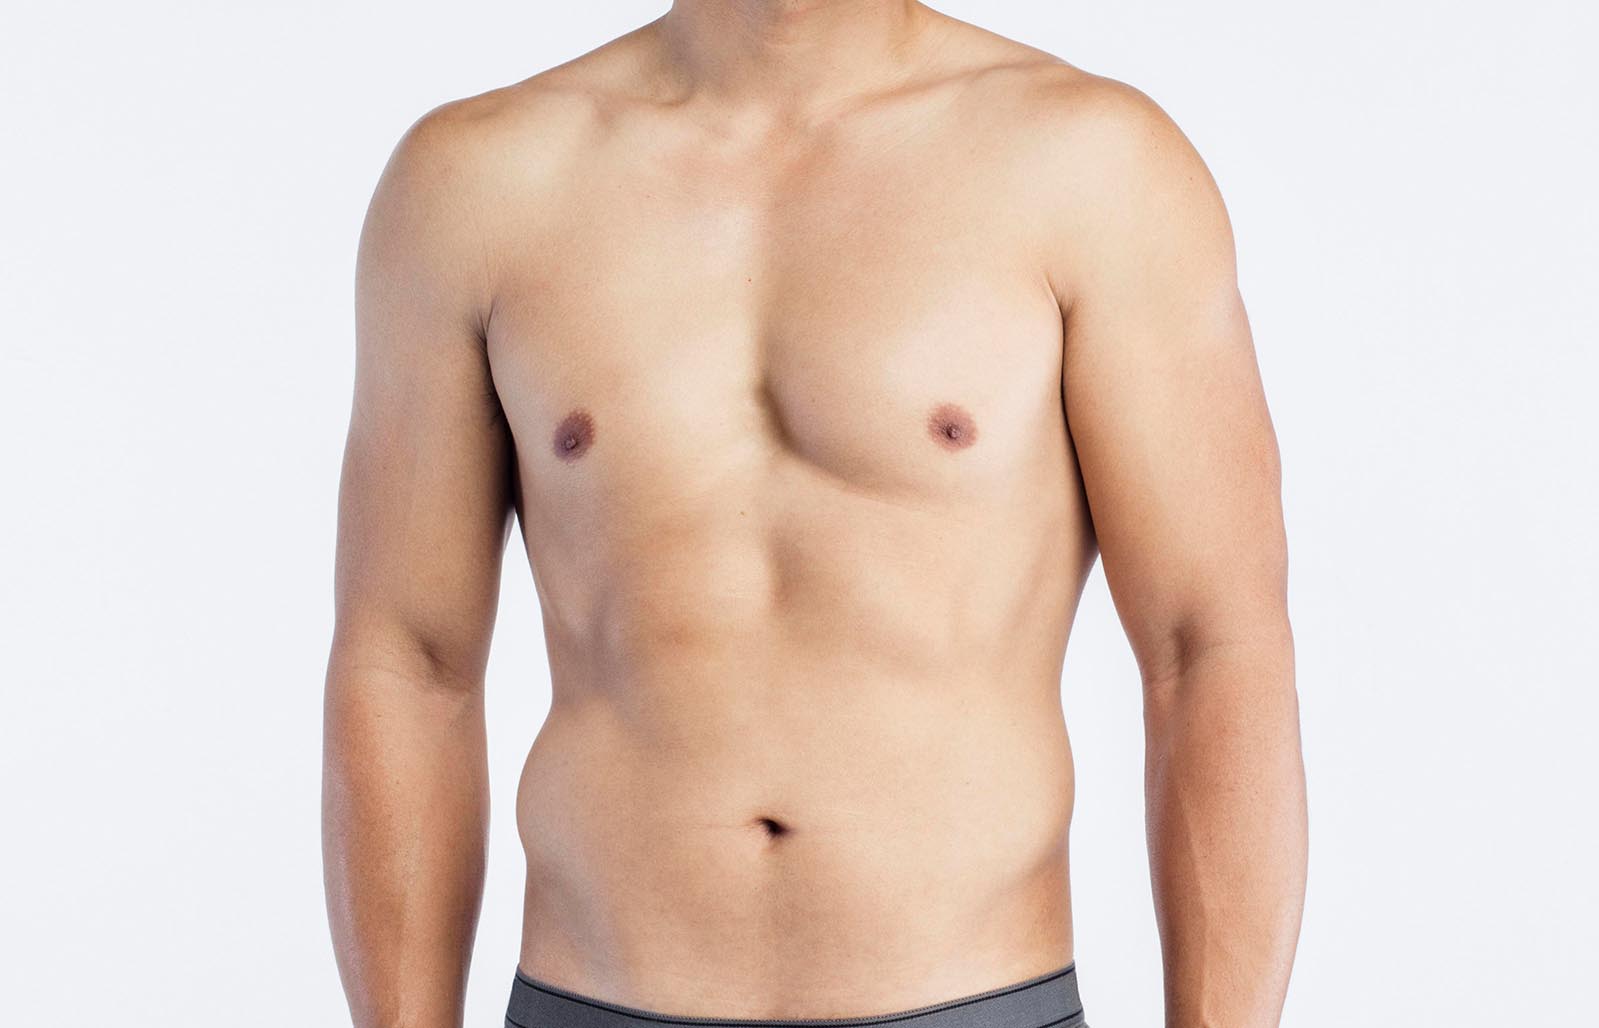 Liposuction and Body Contouring for Men – Dr John Burns